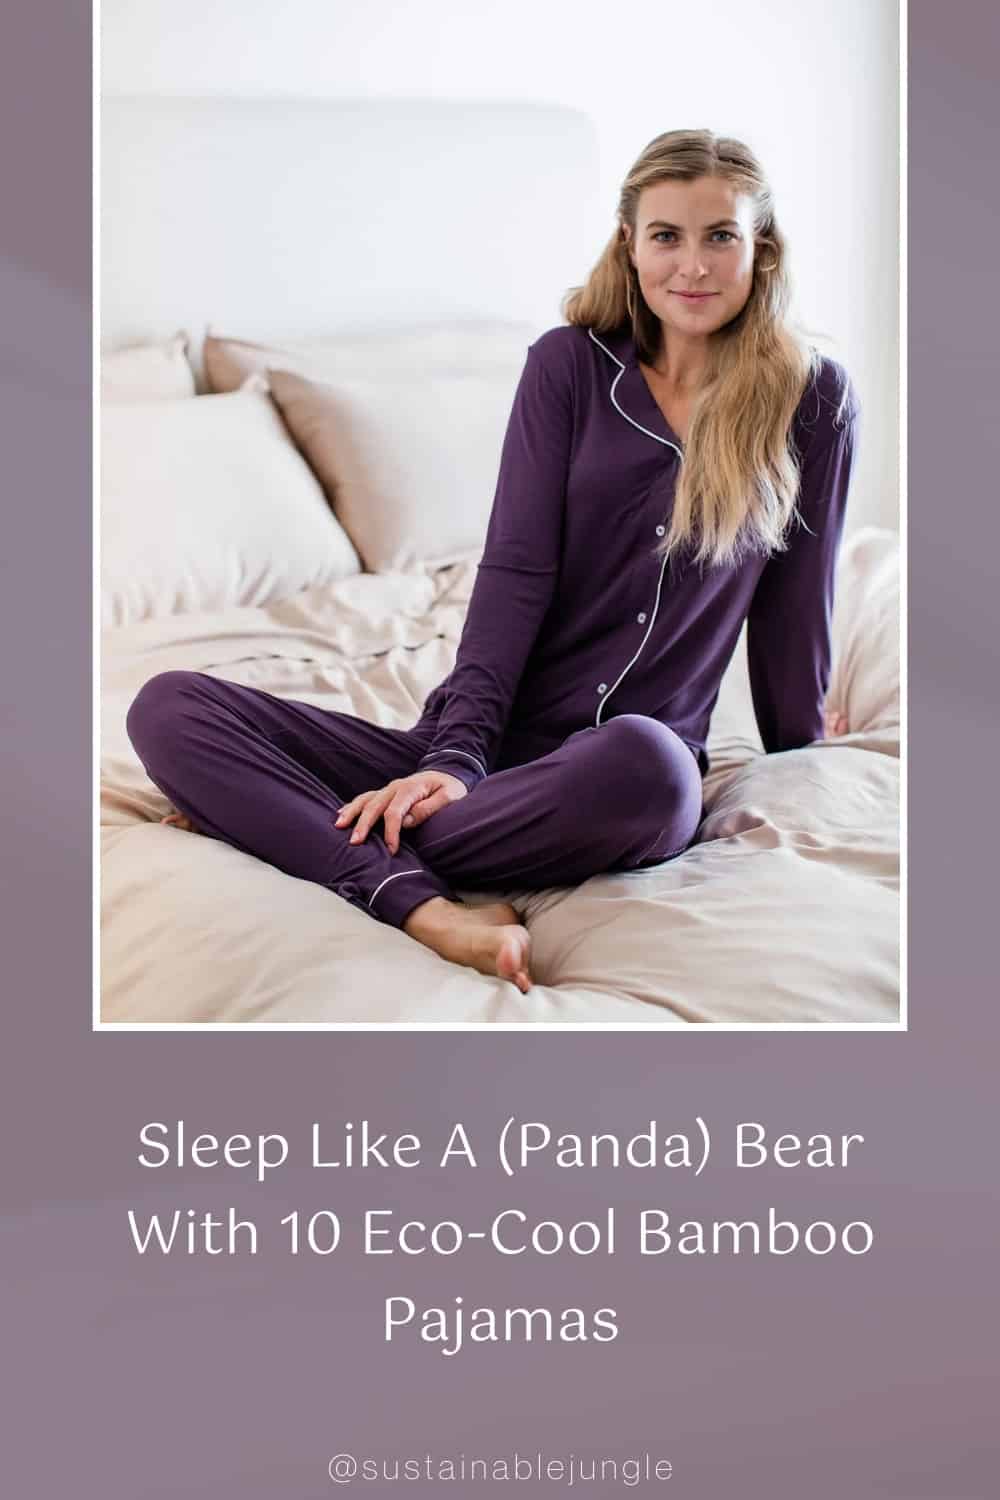 Sleep Like A (Panda) Bear With 10 Eco-Cool Bamboo Pajamas #bamboopajamas #womensbamboopajamas #bestbabybamboopajamas #organicbamboopajamas #bamboopajamasets #bamboosleepwear #sustainablejungle Image by YALA